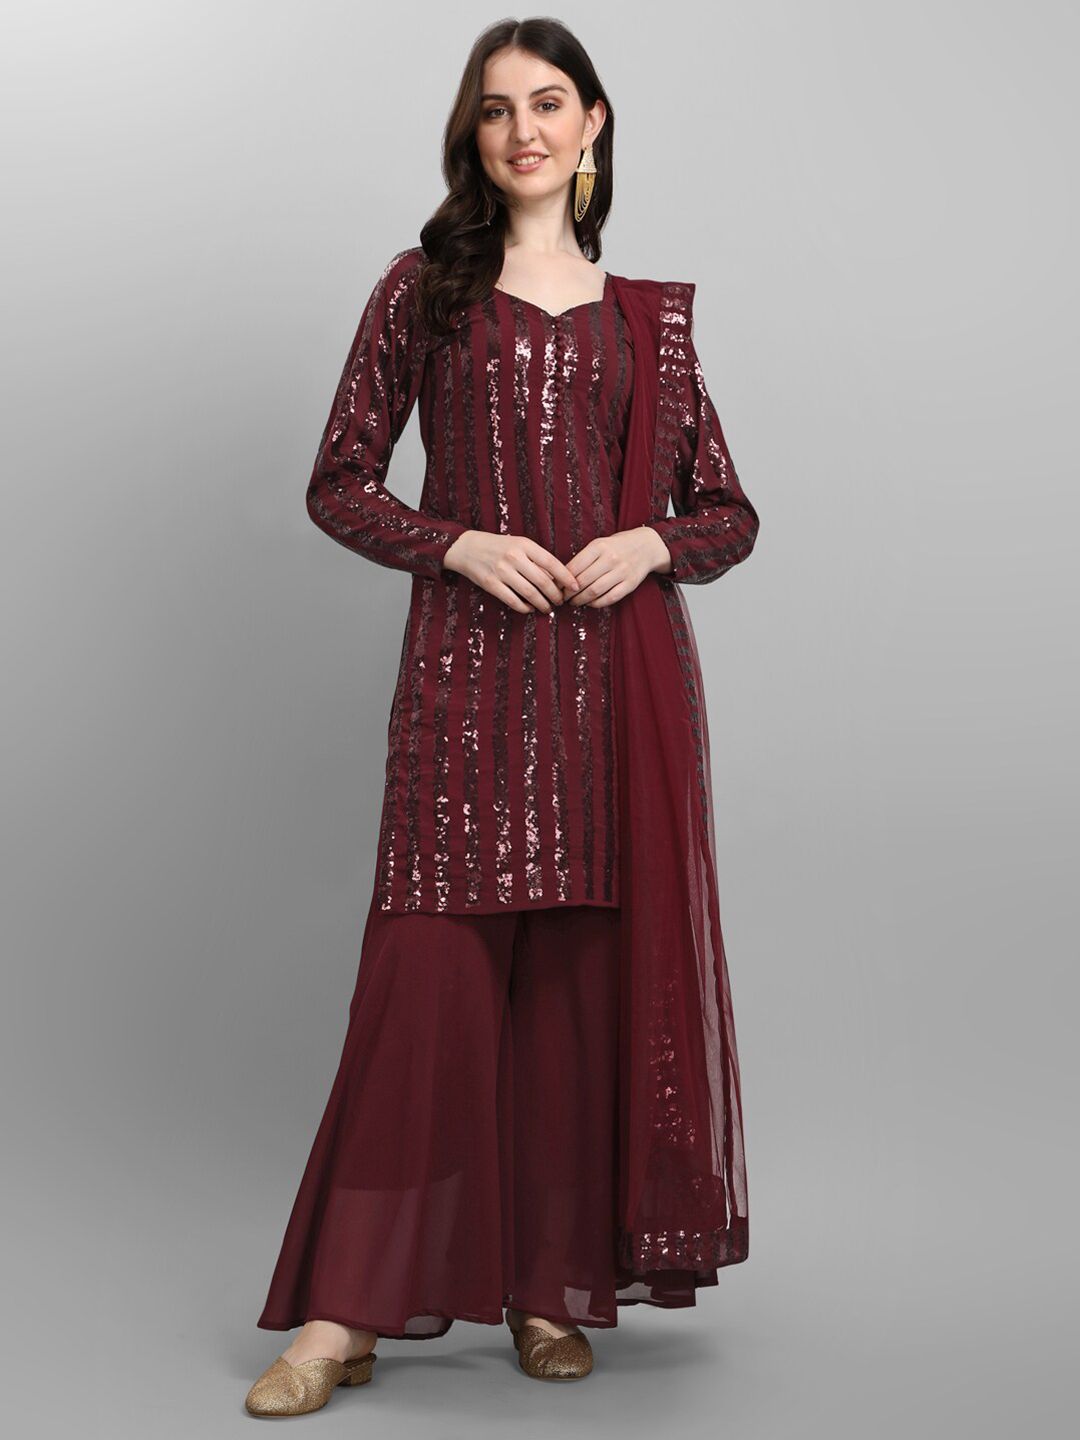 JATRIQQ Maroon Embellished Silk Georgette Semi-Stitched Dress Material Price in India